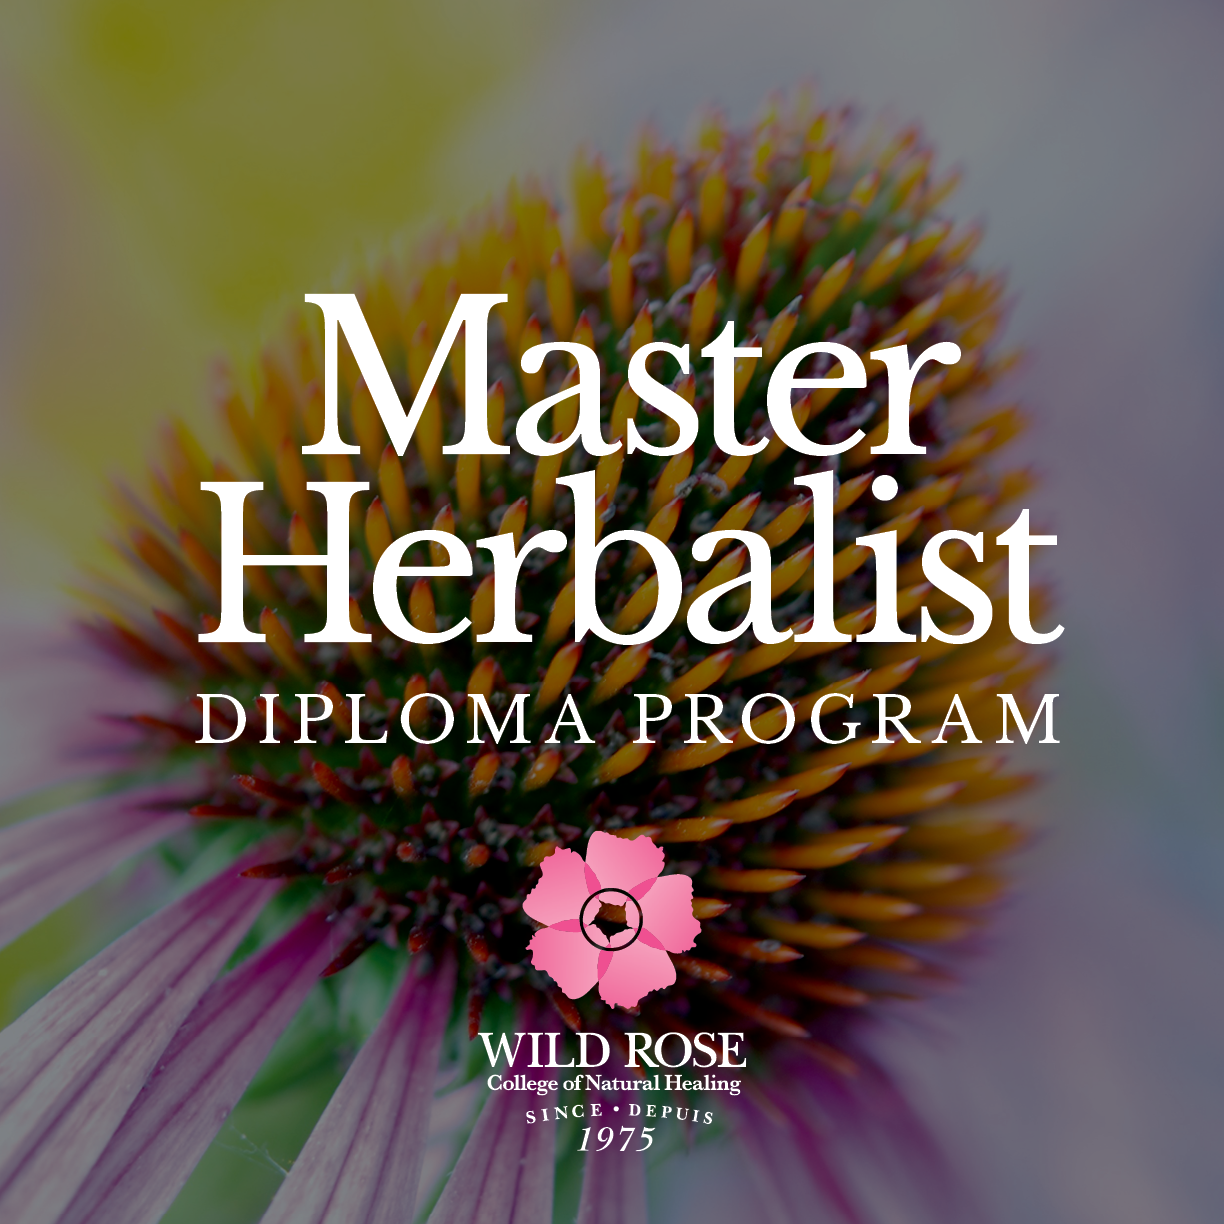 Master Herbalist Diploma_Program Covers1